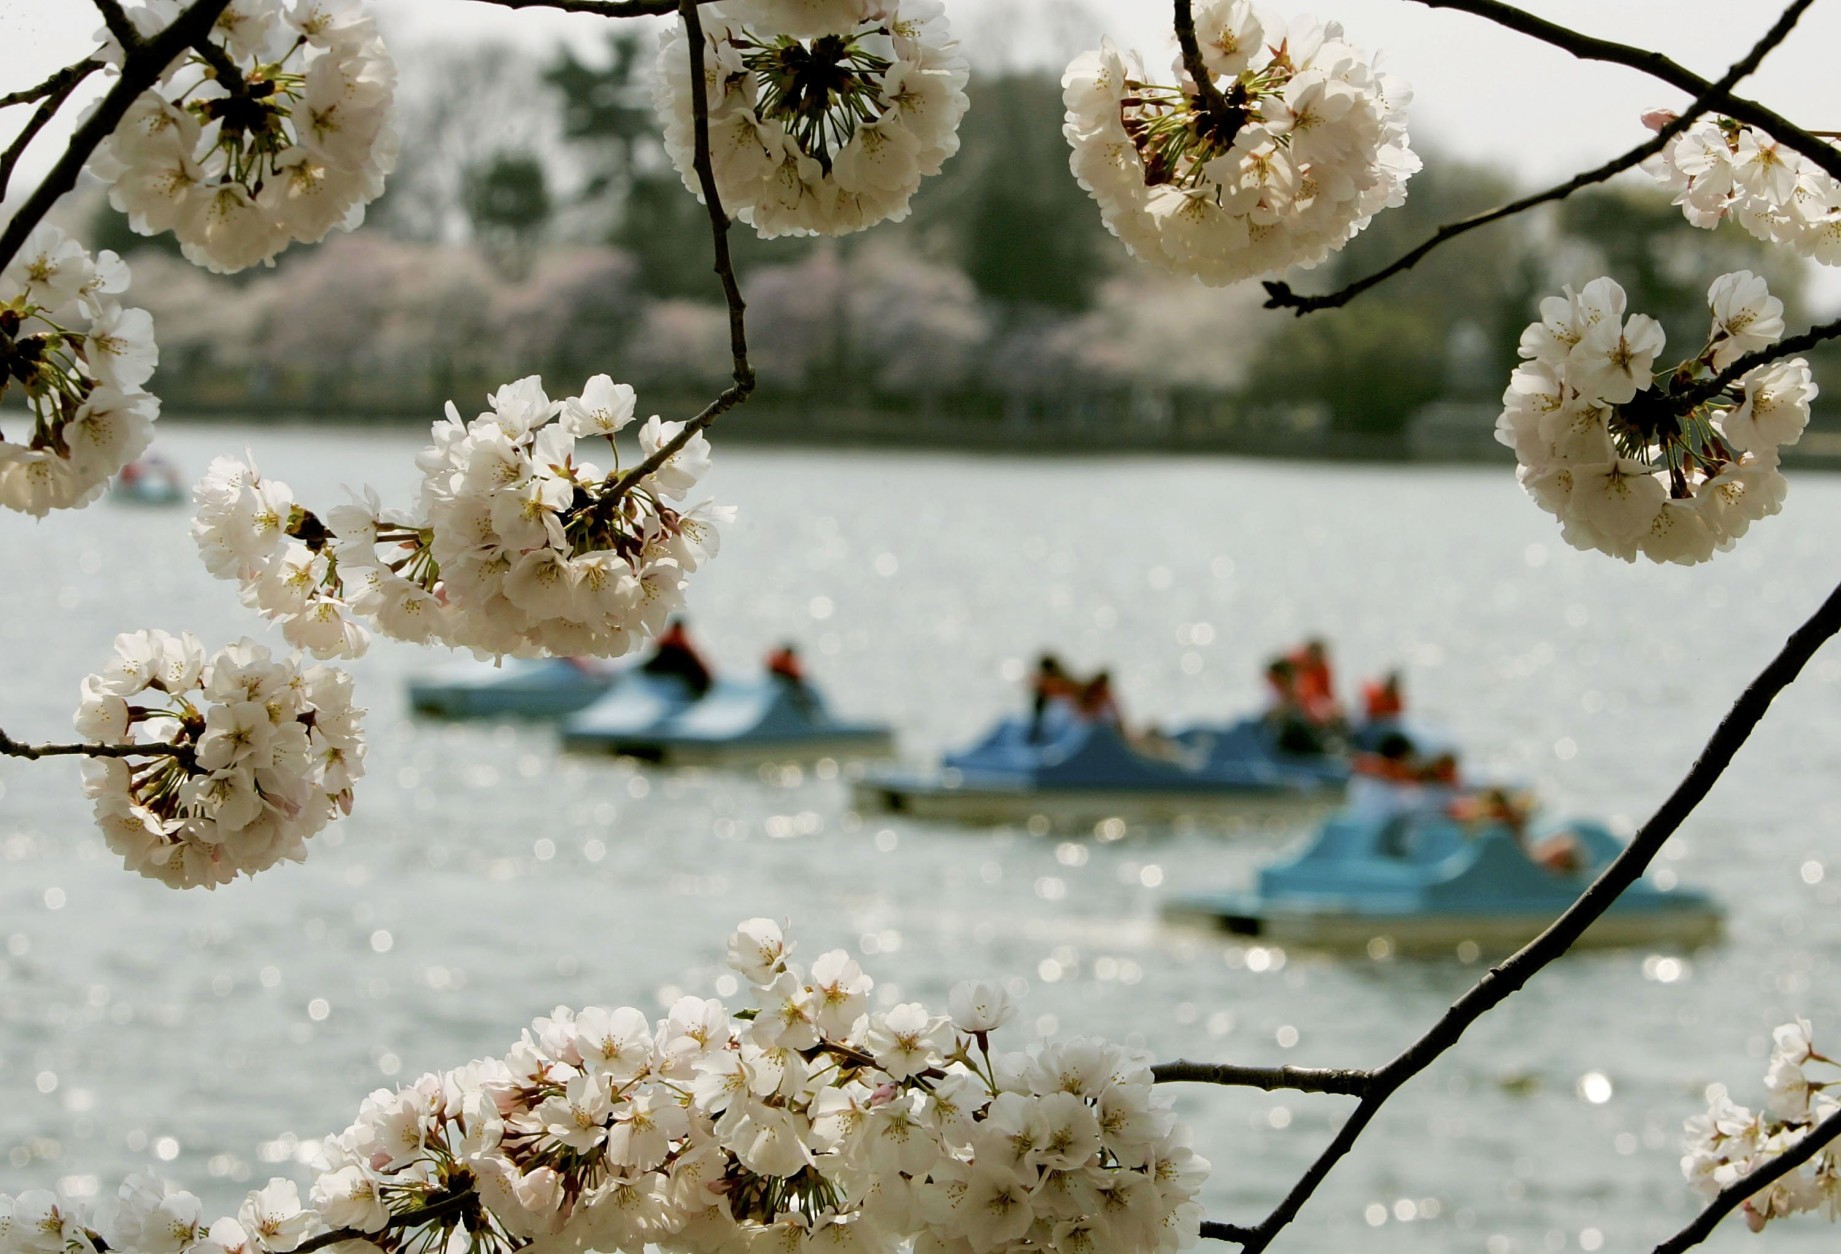 National Park Service revises peak Cherry blossom bloom dates 